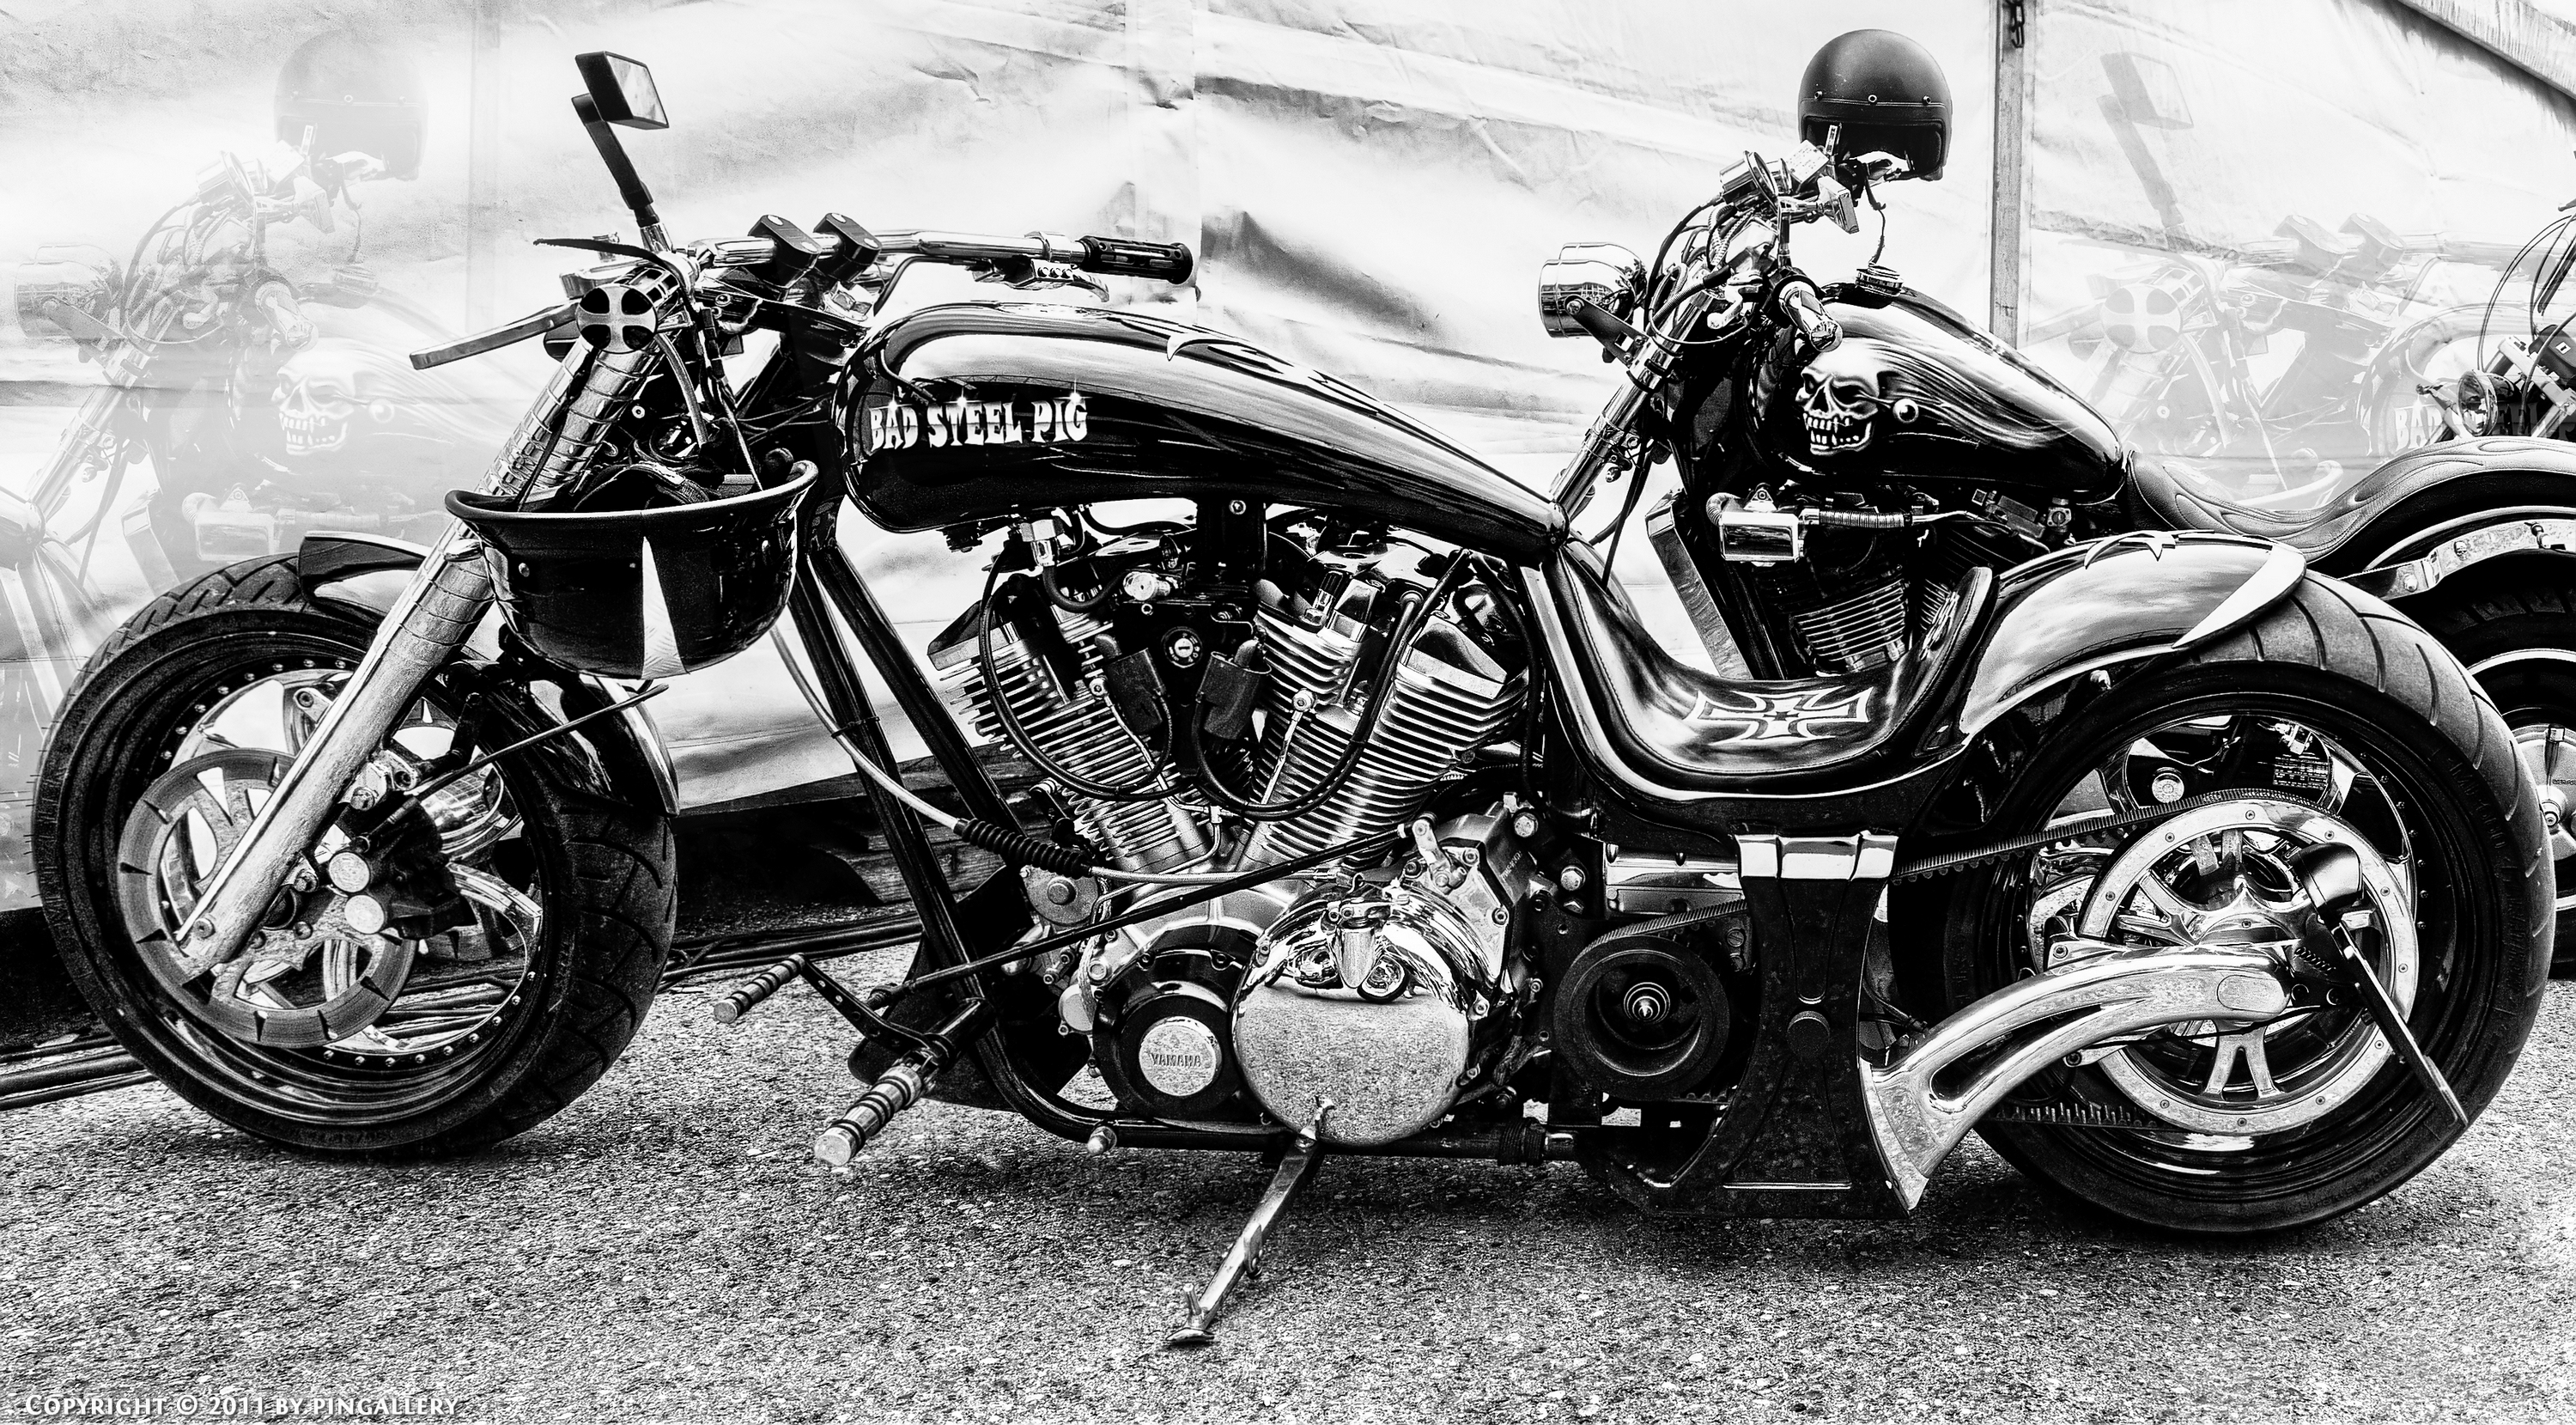 Harley Davidson Skull Wallpaper Full HD Cuteclipart Xyz